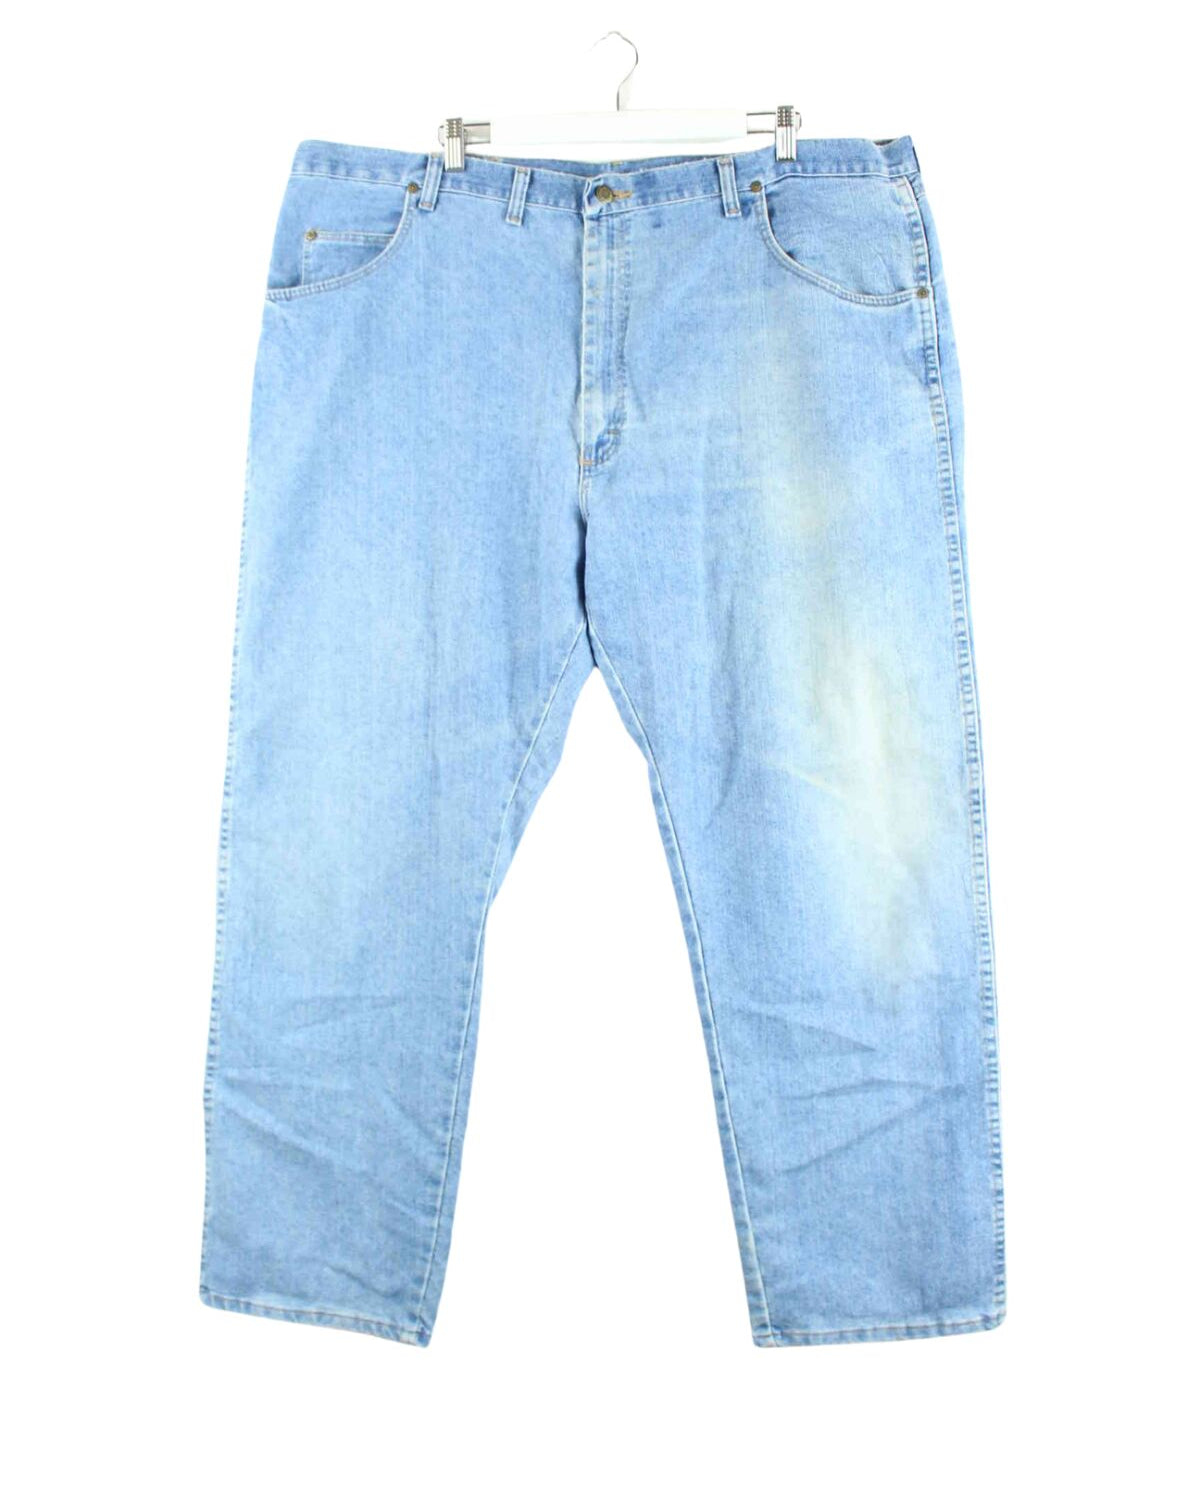 Wrangler Rugged Wear Jeans Blau W44 L30 (front image)